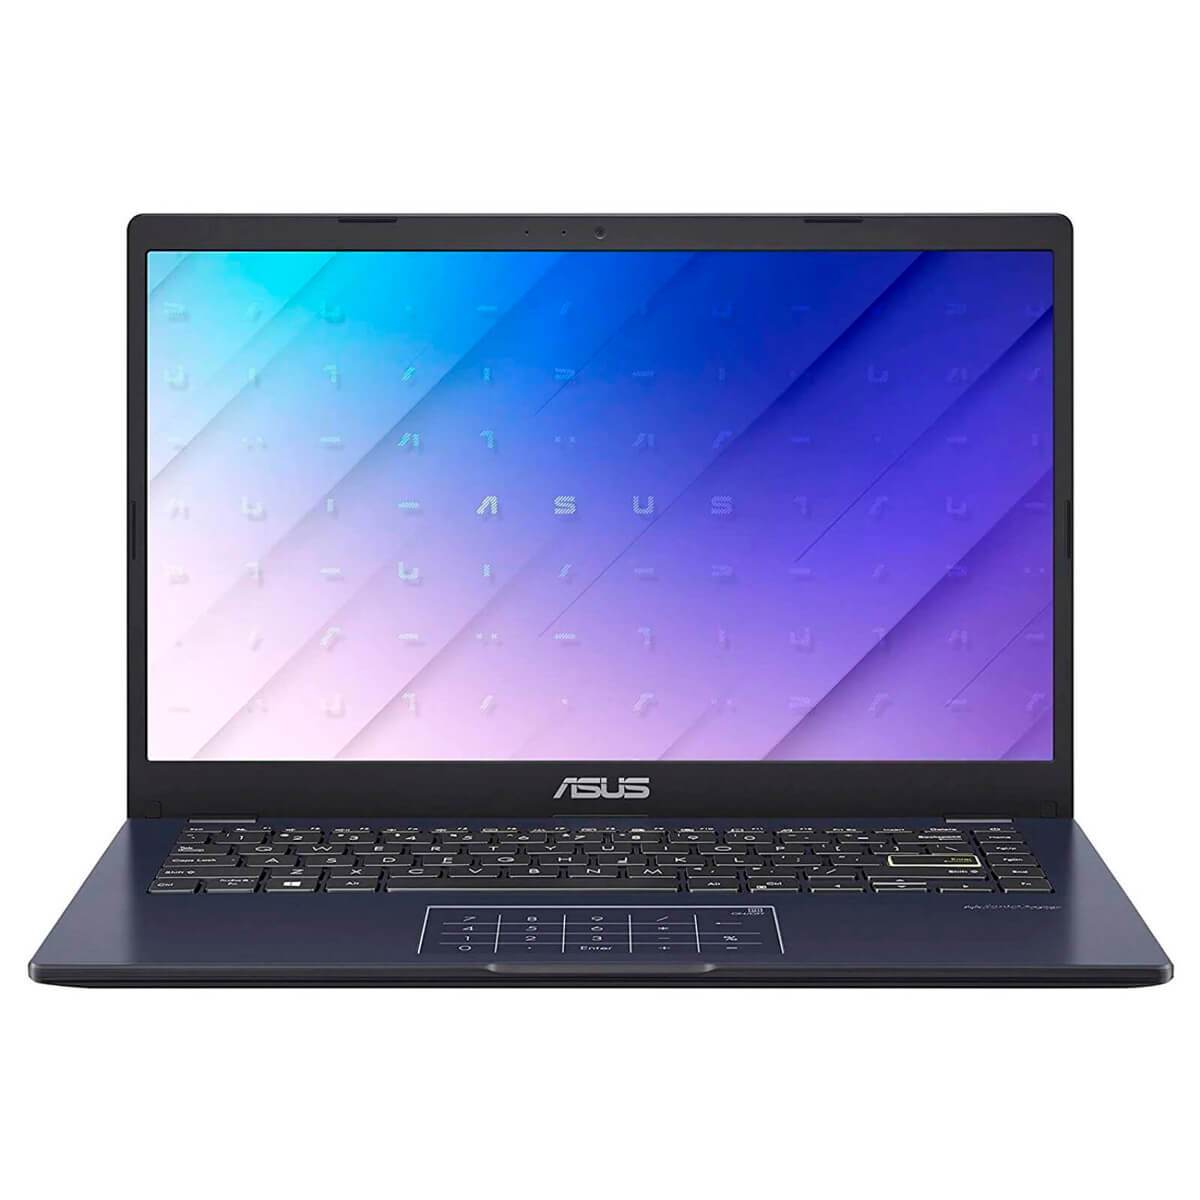 Laptop Asus L410MA 14" Negra